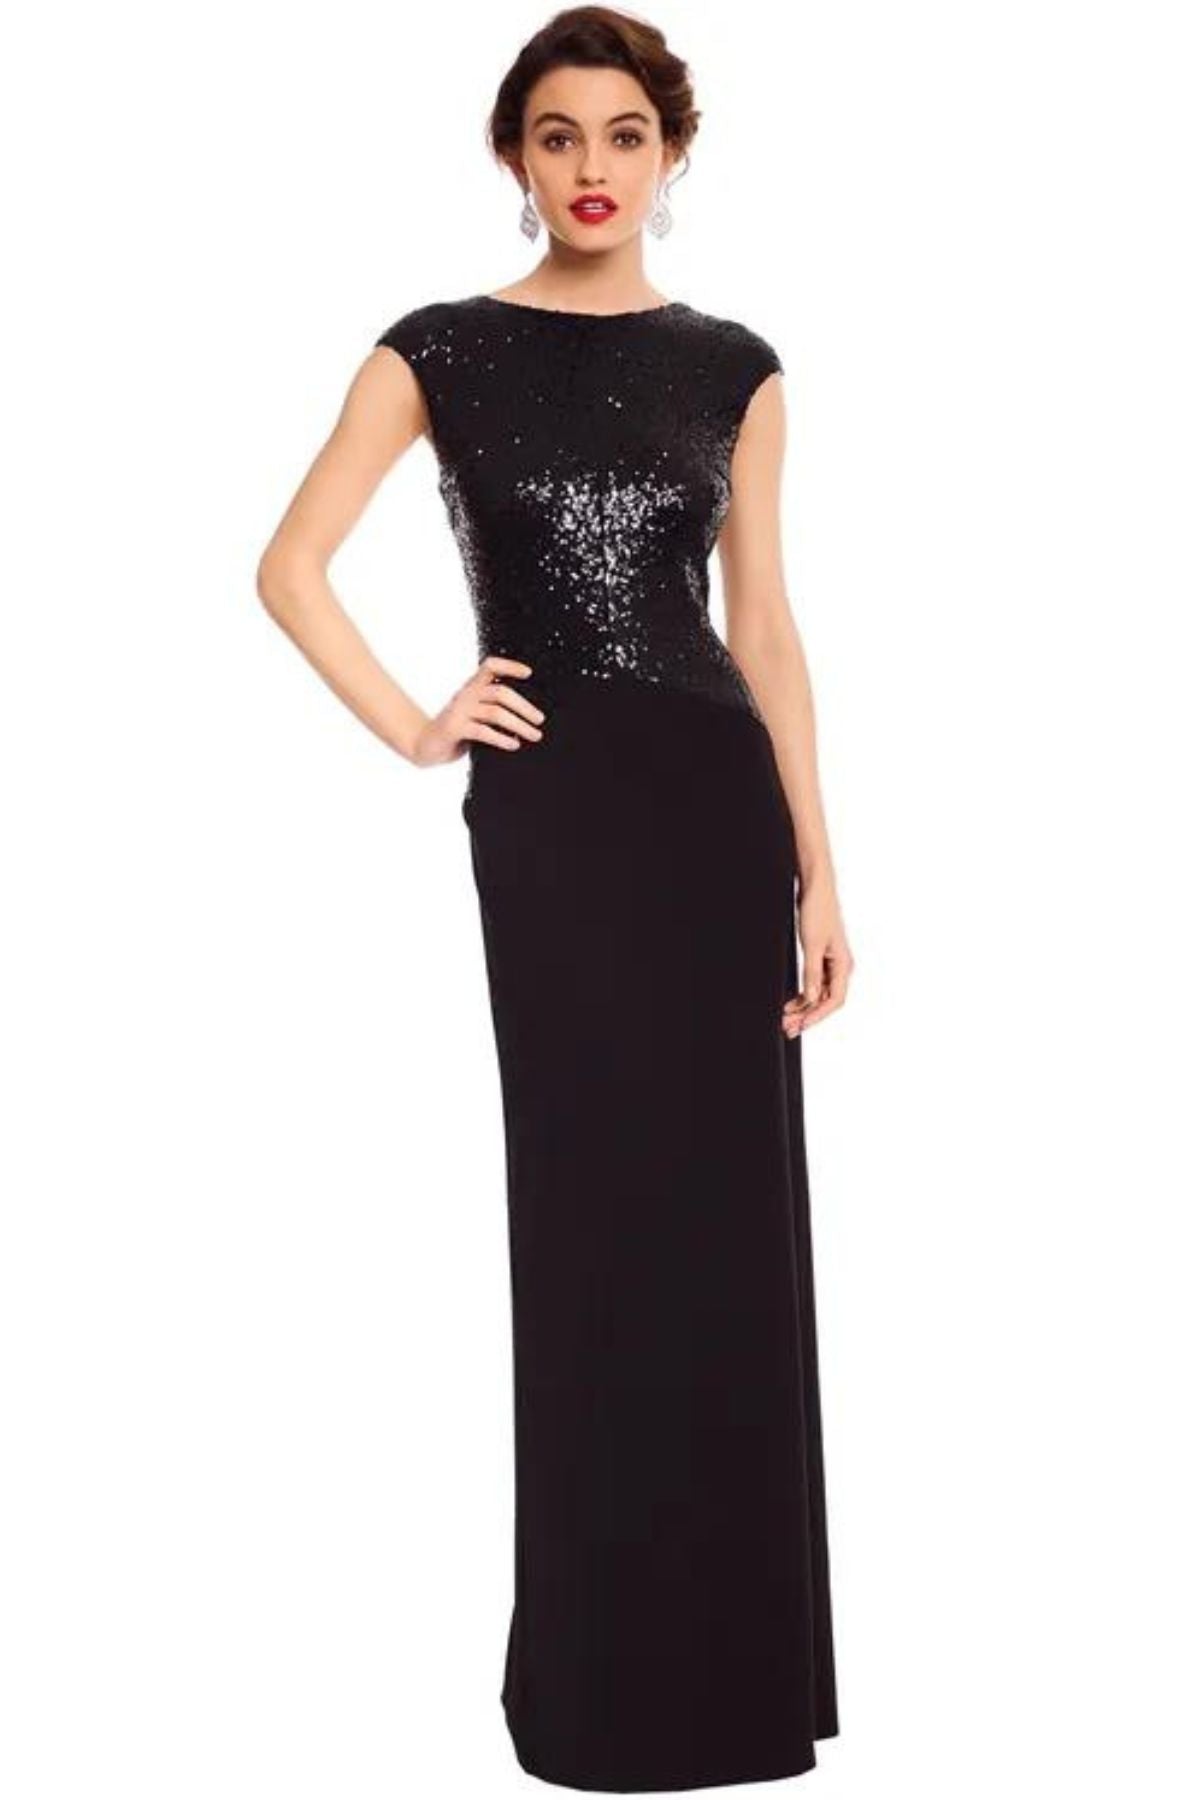 Ella Lace Maxi Dress - Black, Fashion Nova, Dresses